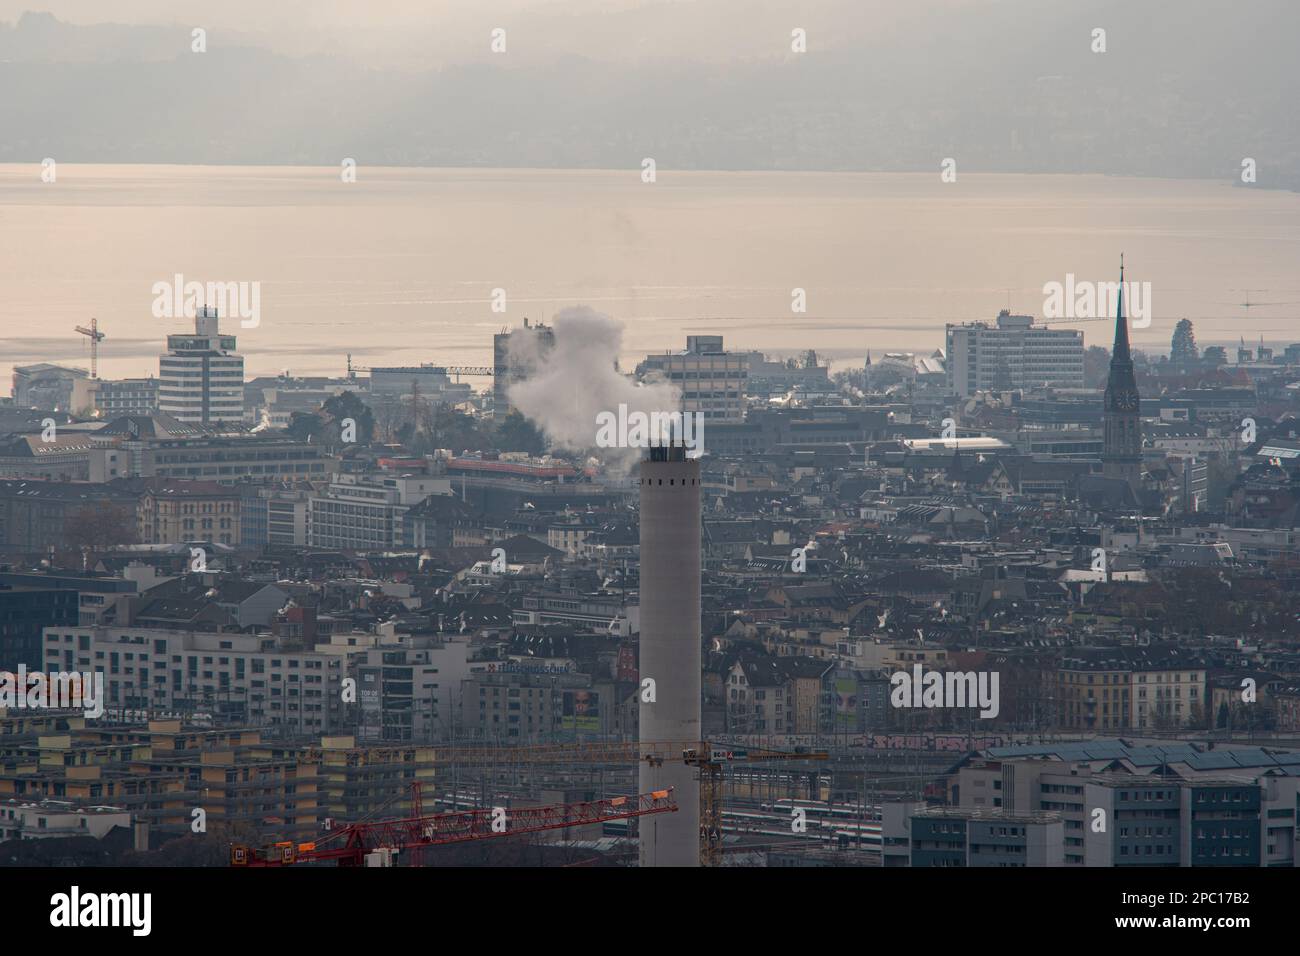 Tall smokestack or industrial chimney emitting white smoke or steam. Zurich city Switzerland, gray cloudy winter day, close-up telephoto shot. Stock Photo